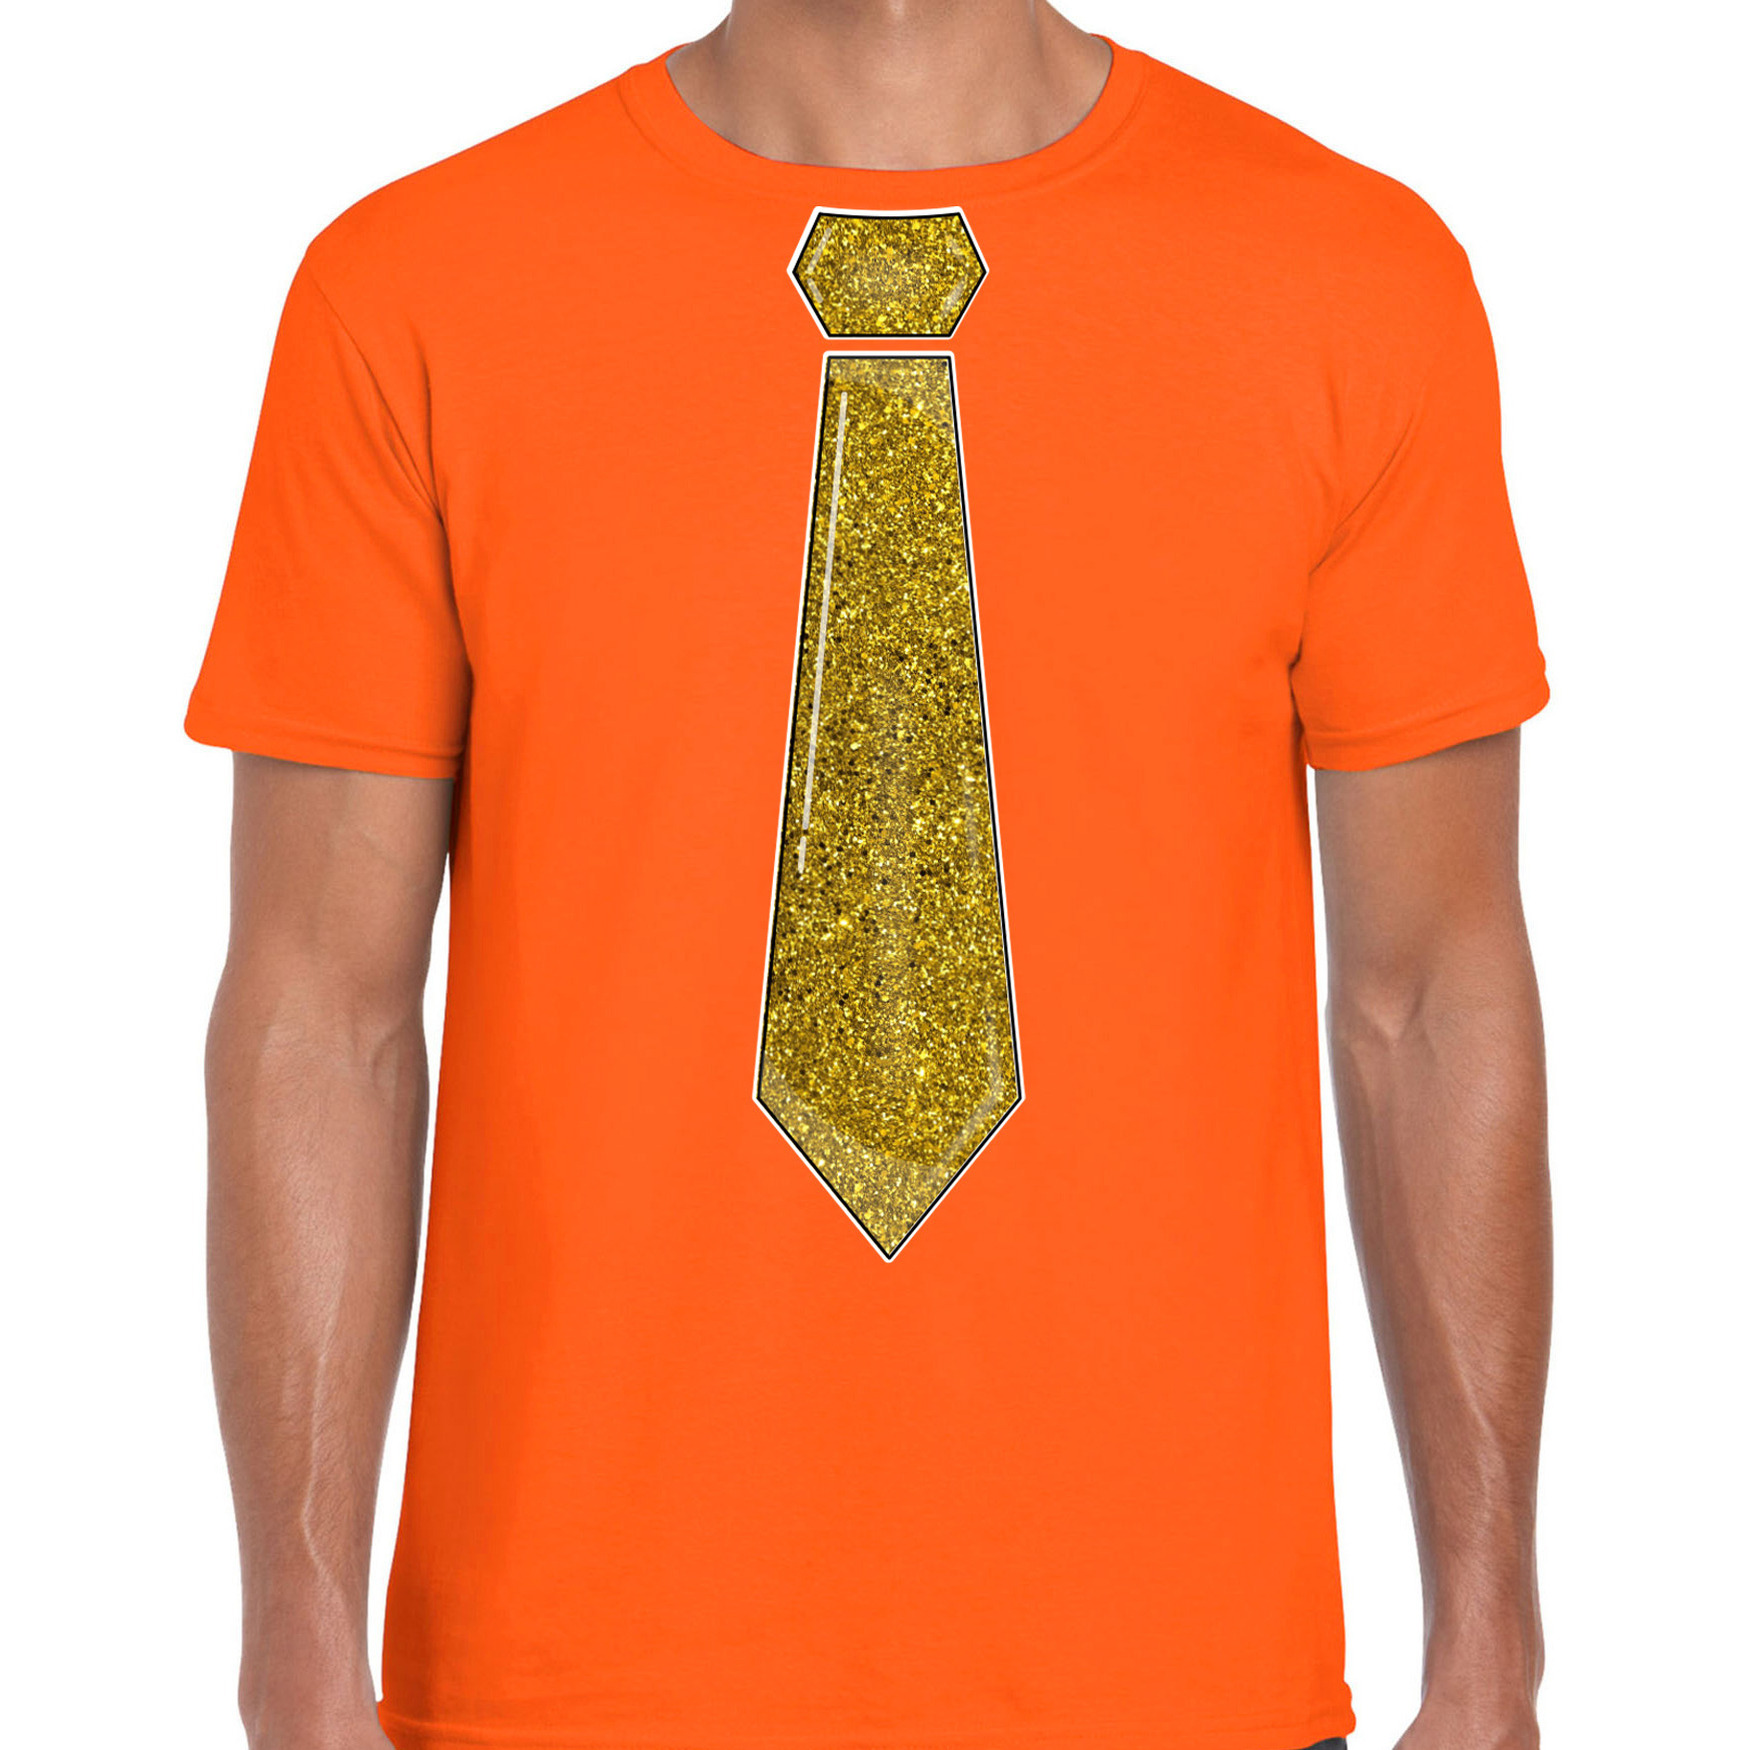 Verkleed t-shirt voor heren stropdas glitter goud oranje carnaval foute party